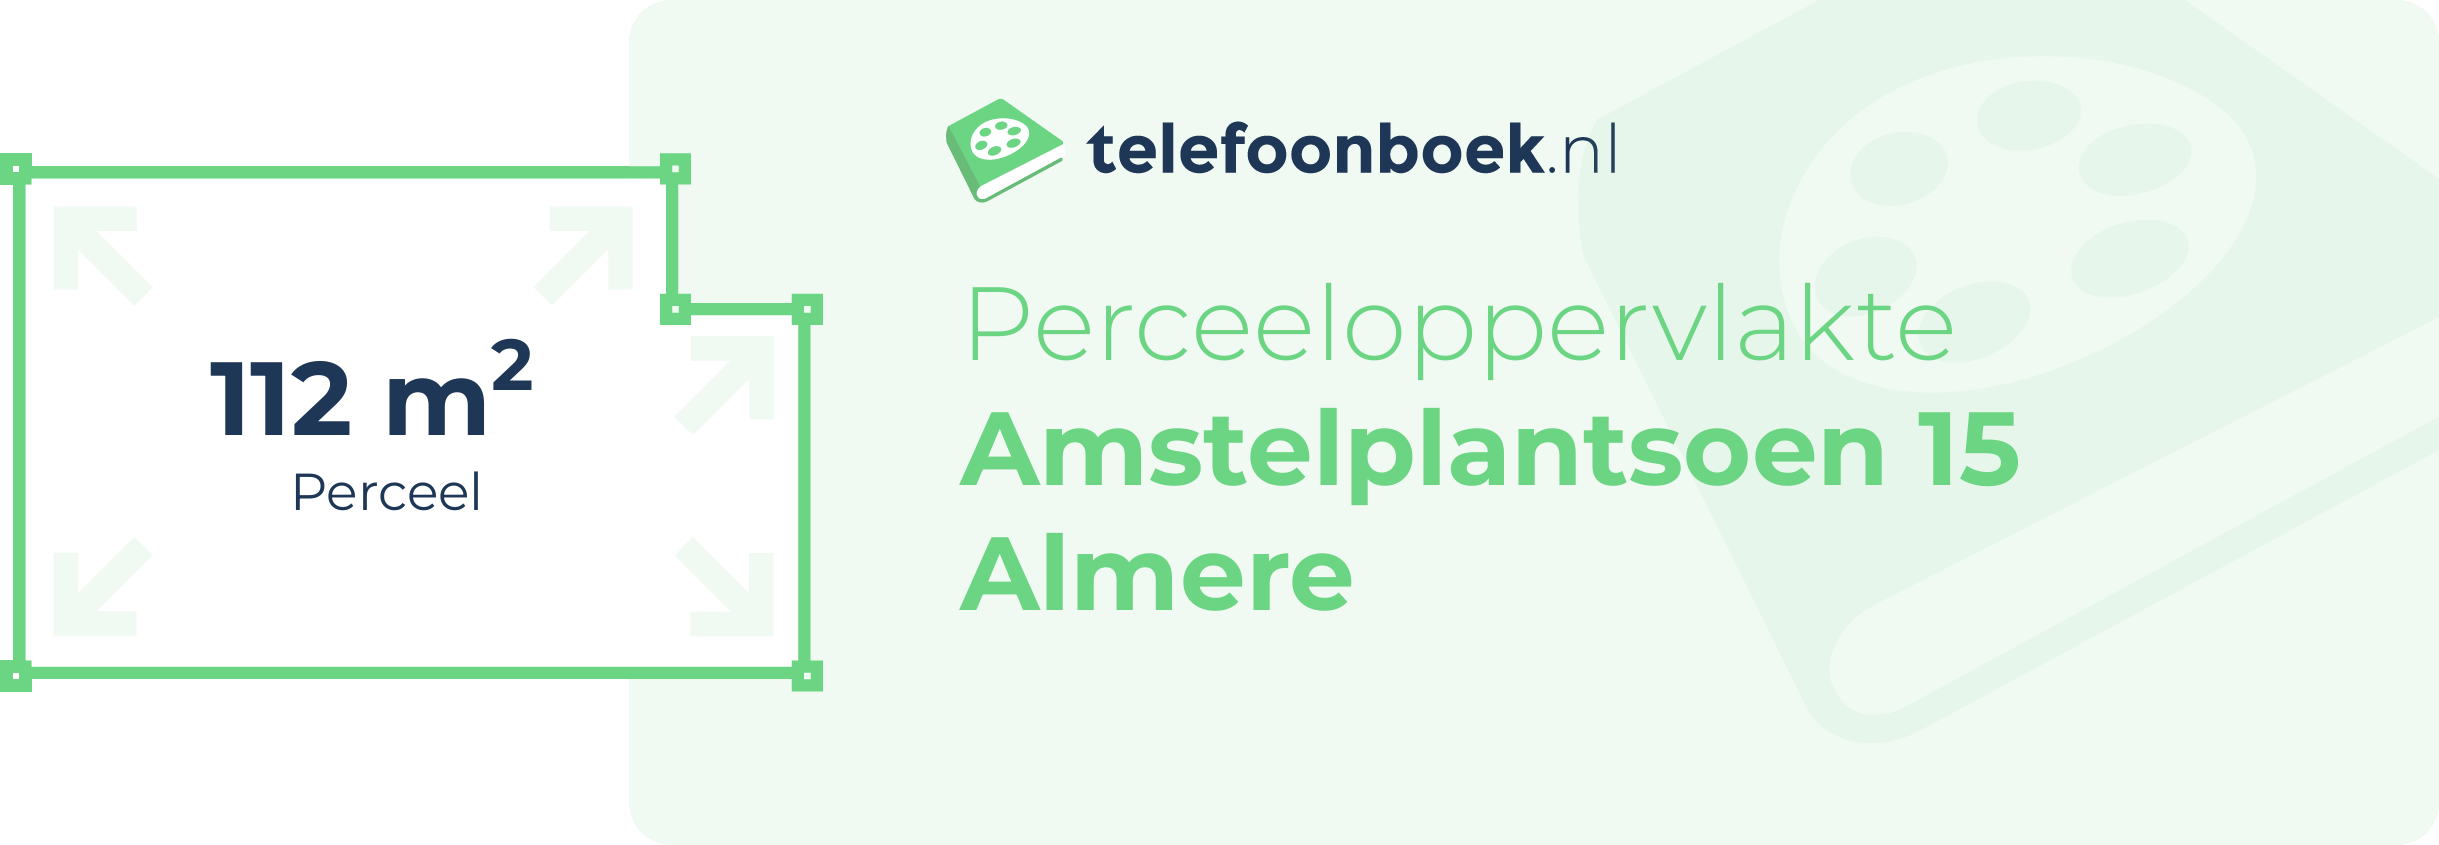 Perceeloppervlakte Amstelplantsoen 15 Almere